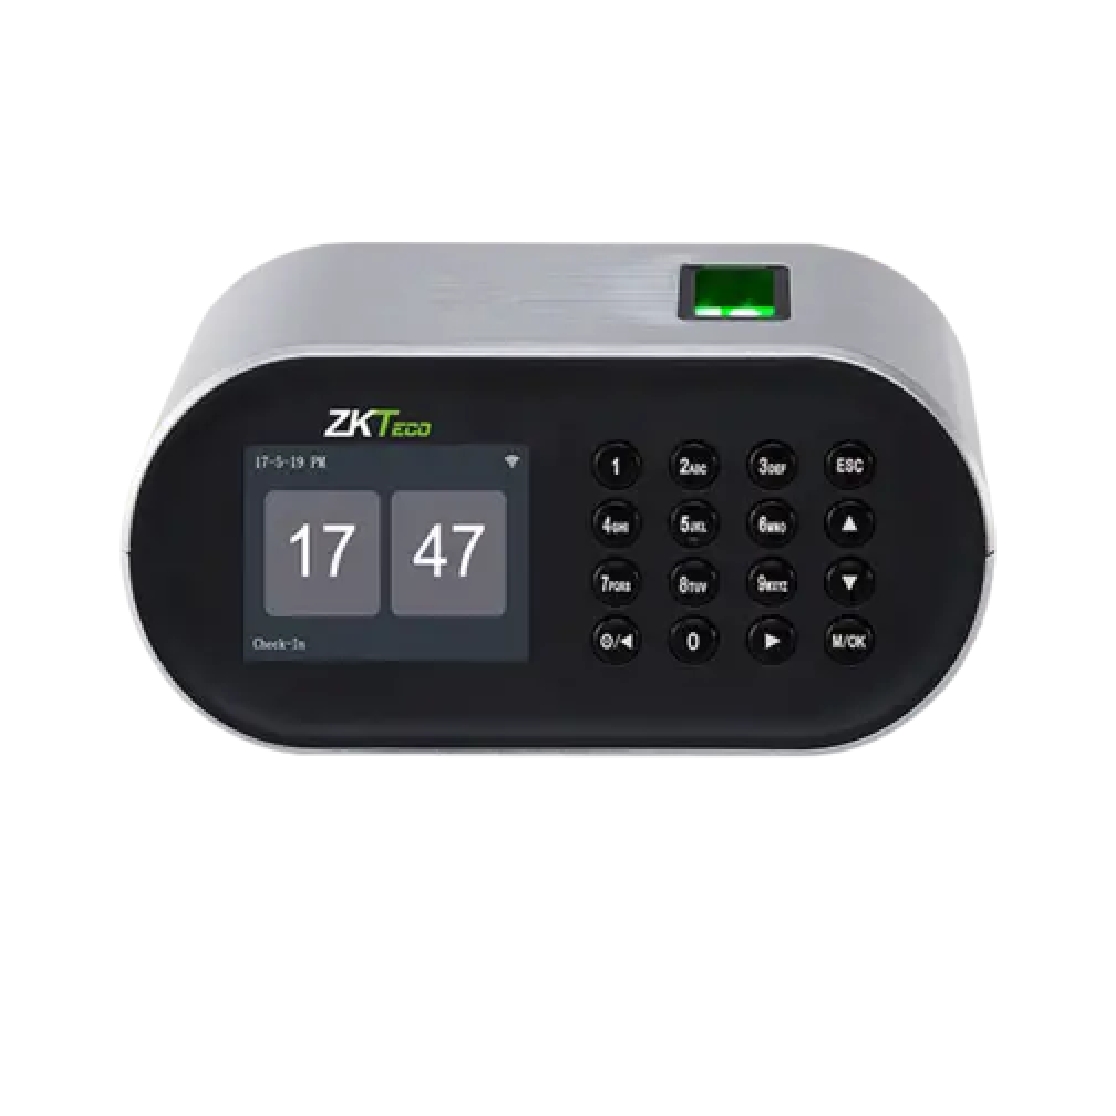 Zkteco D1 Fingerprint Attendance System with WIFI